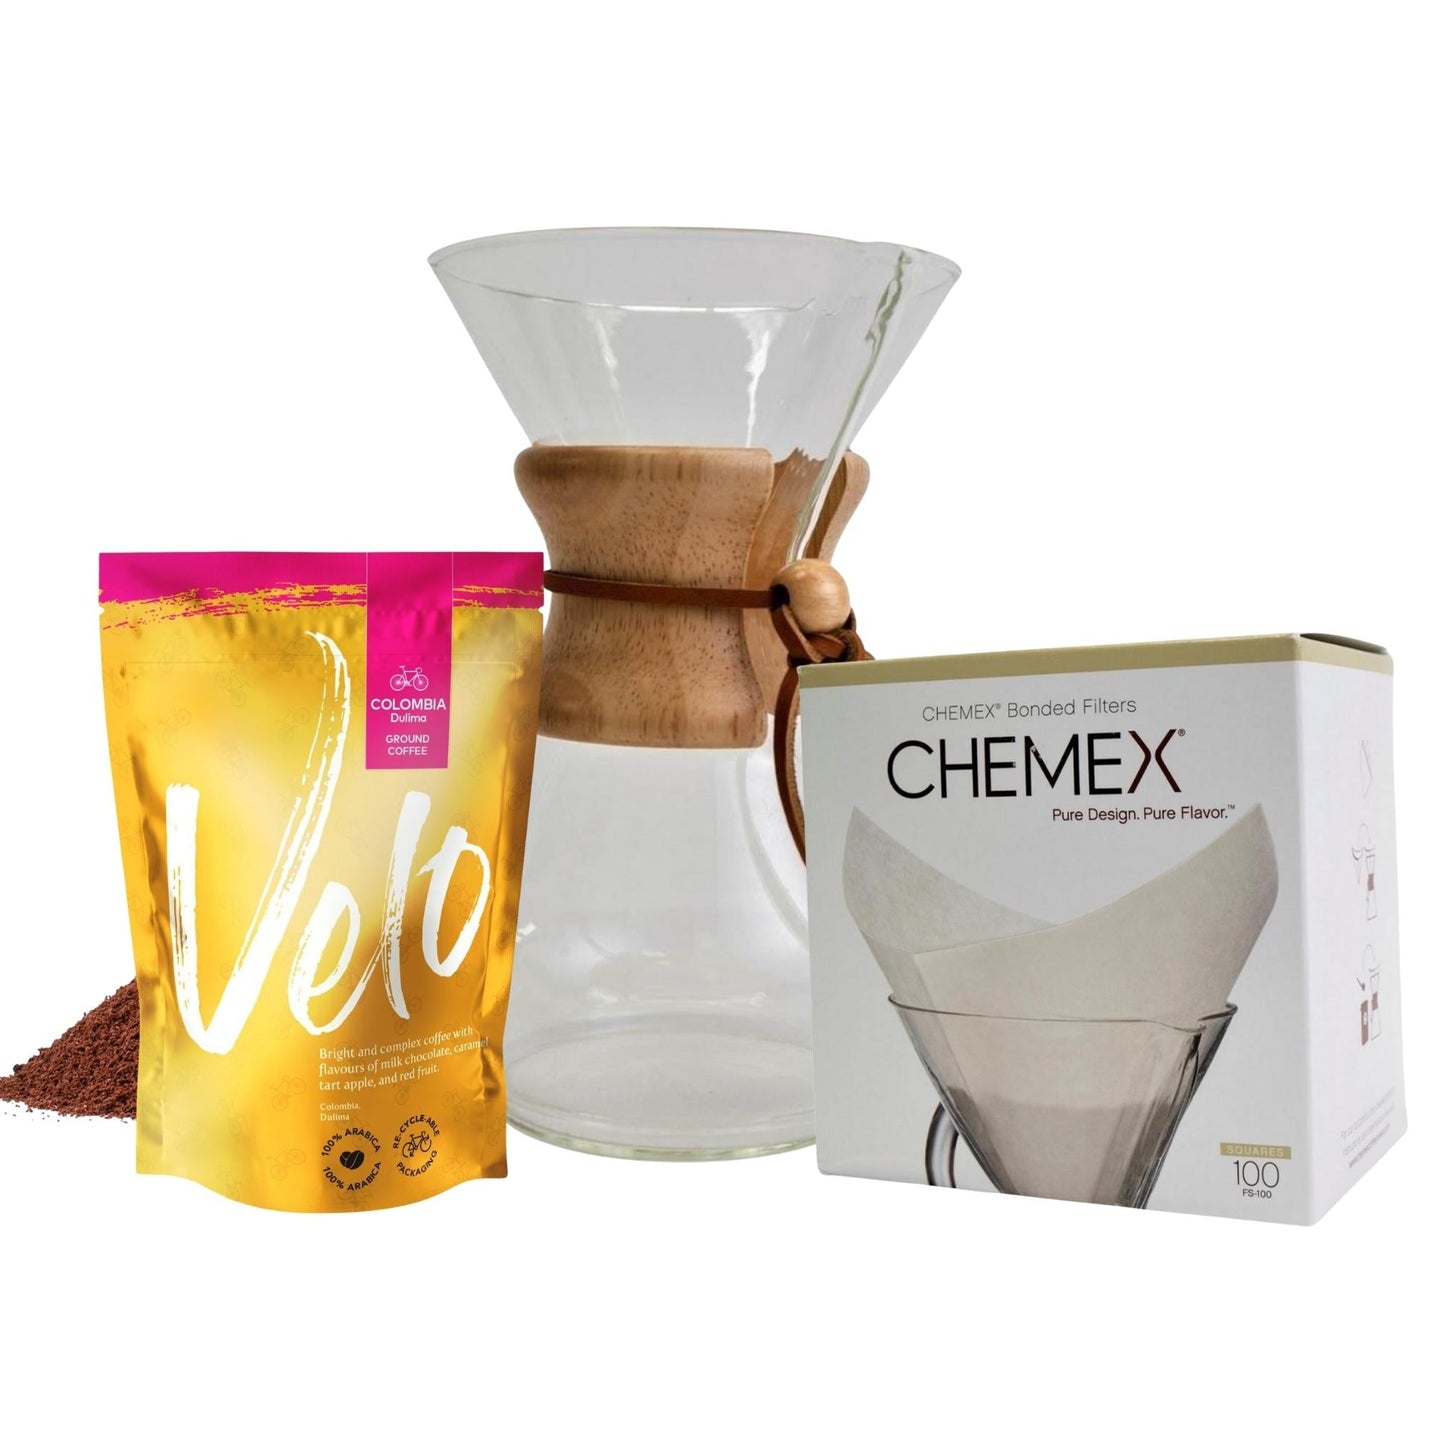 Chemex Bundle - Velo Coffee Roasters